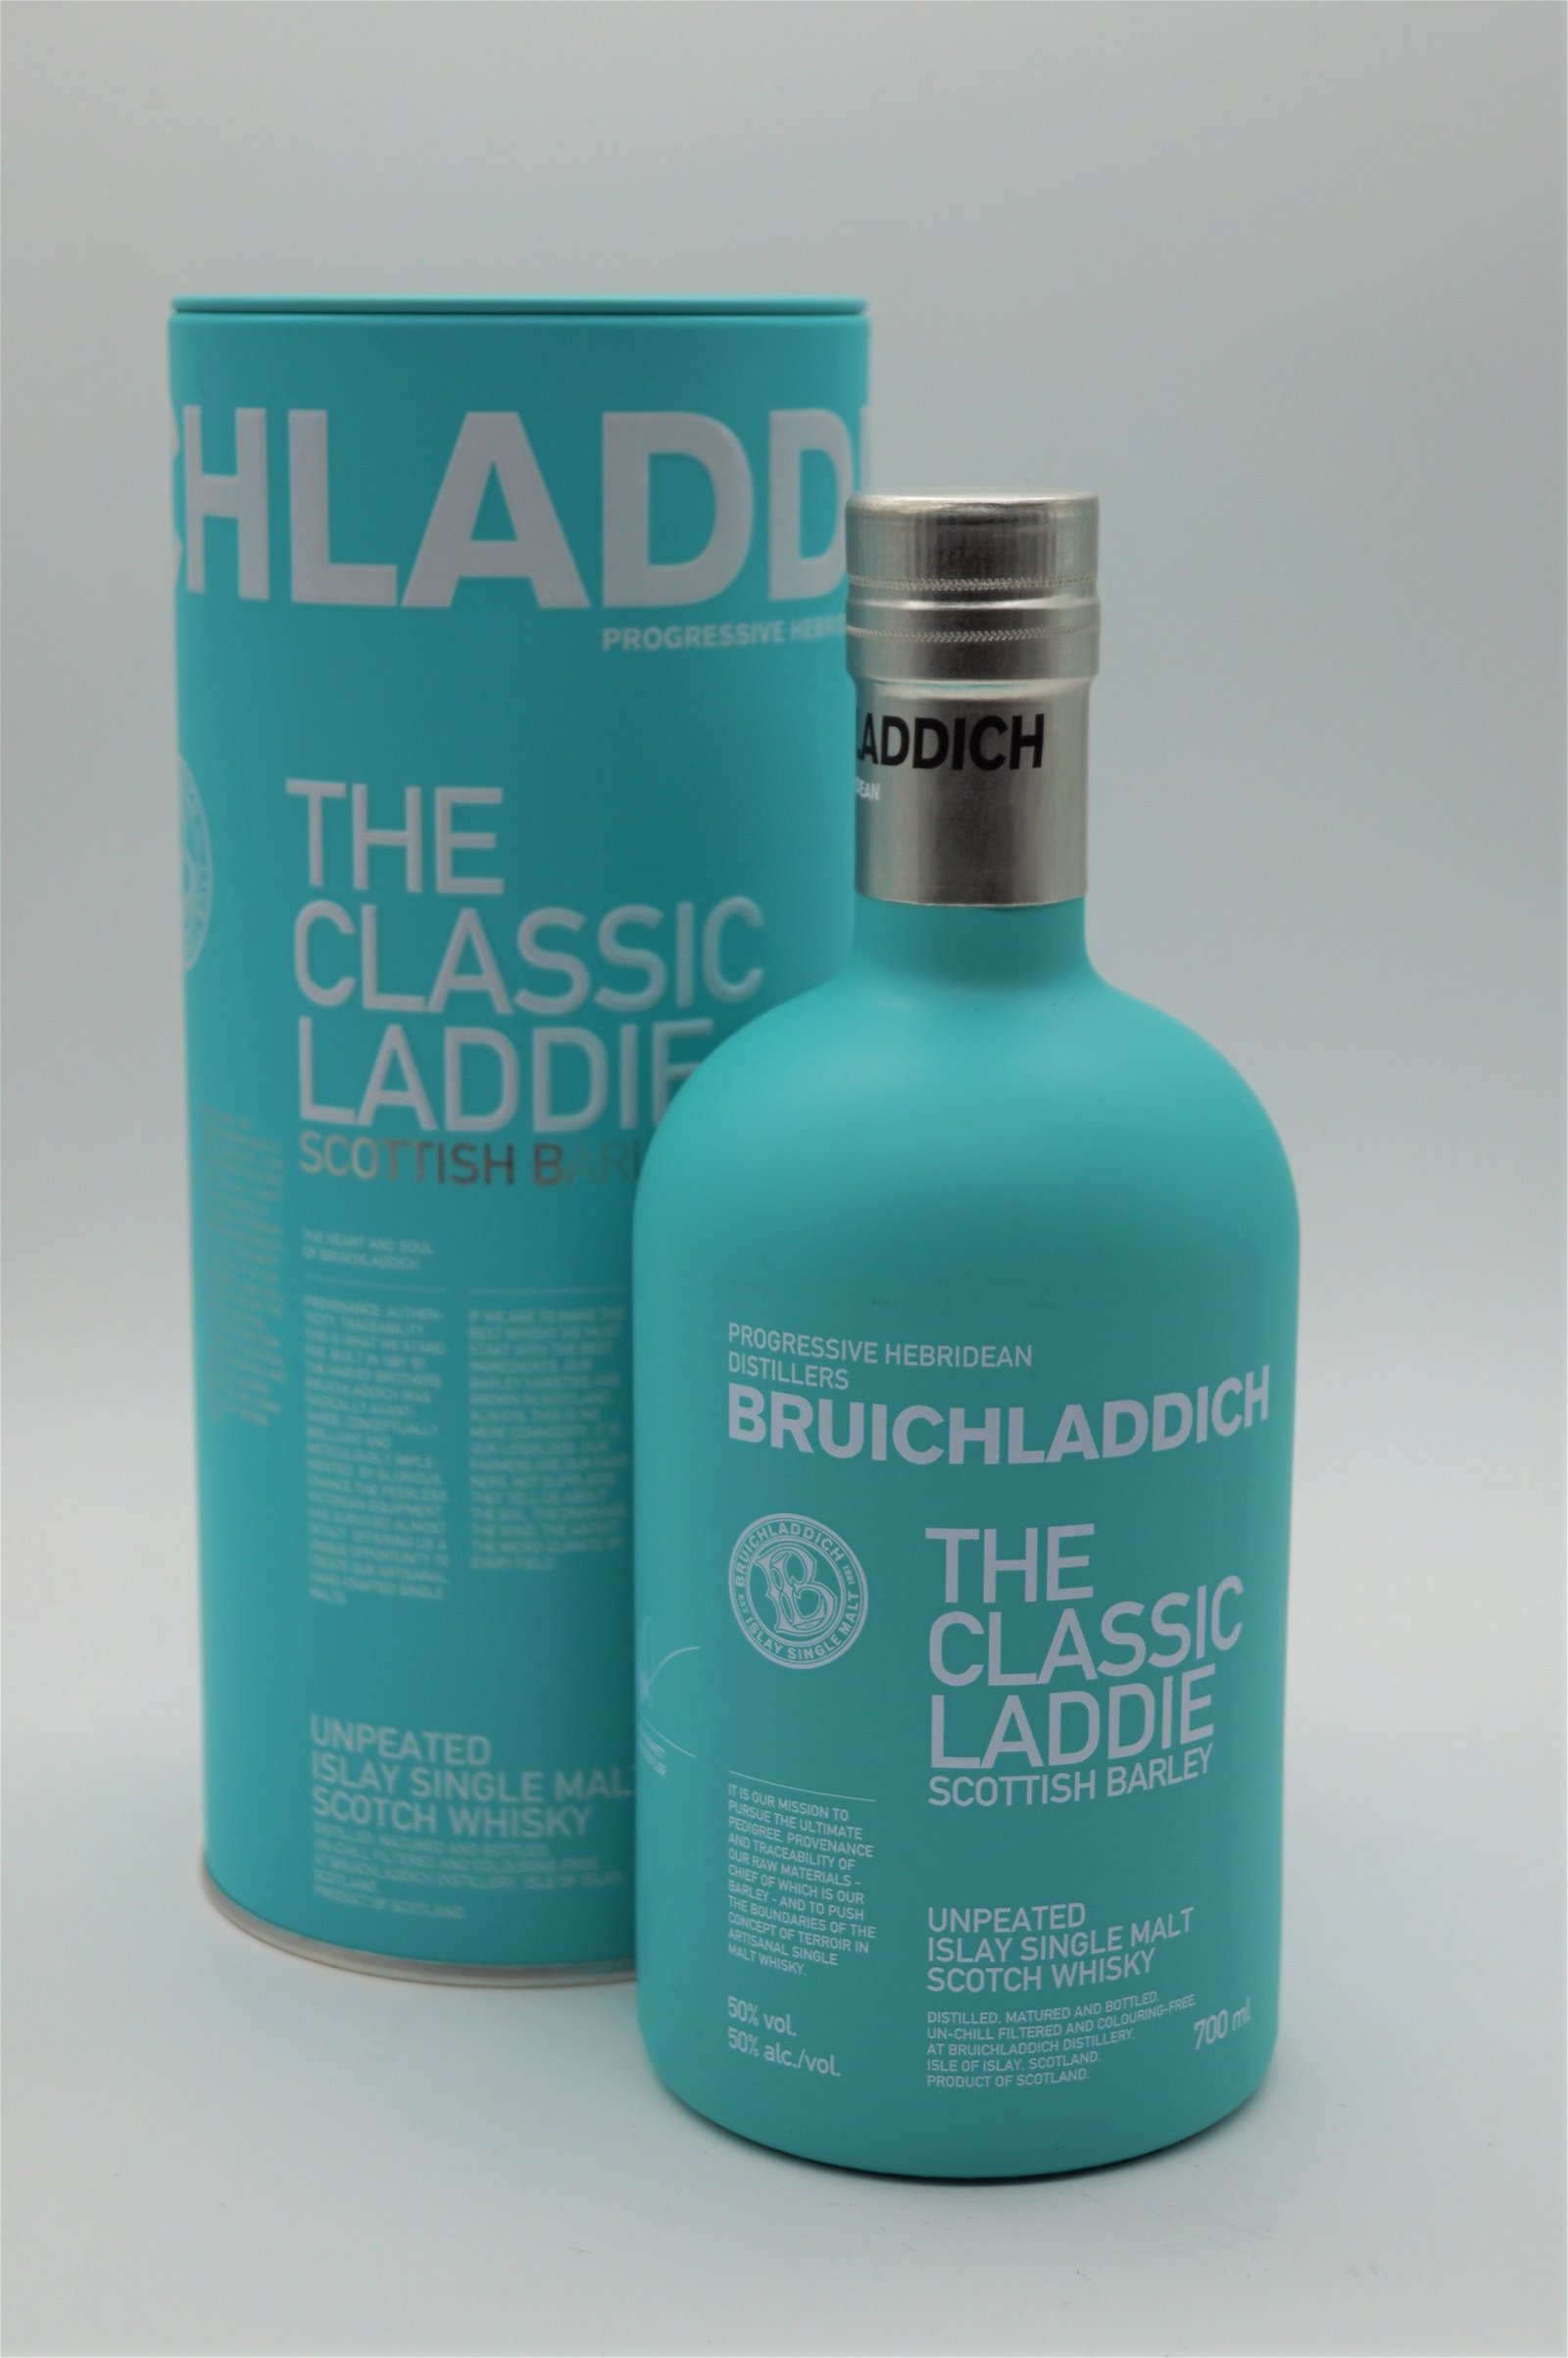 Bruichladdich The Classic Laddie Scottish Barley Single Malt Scotch Whisky